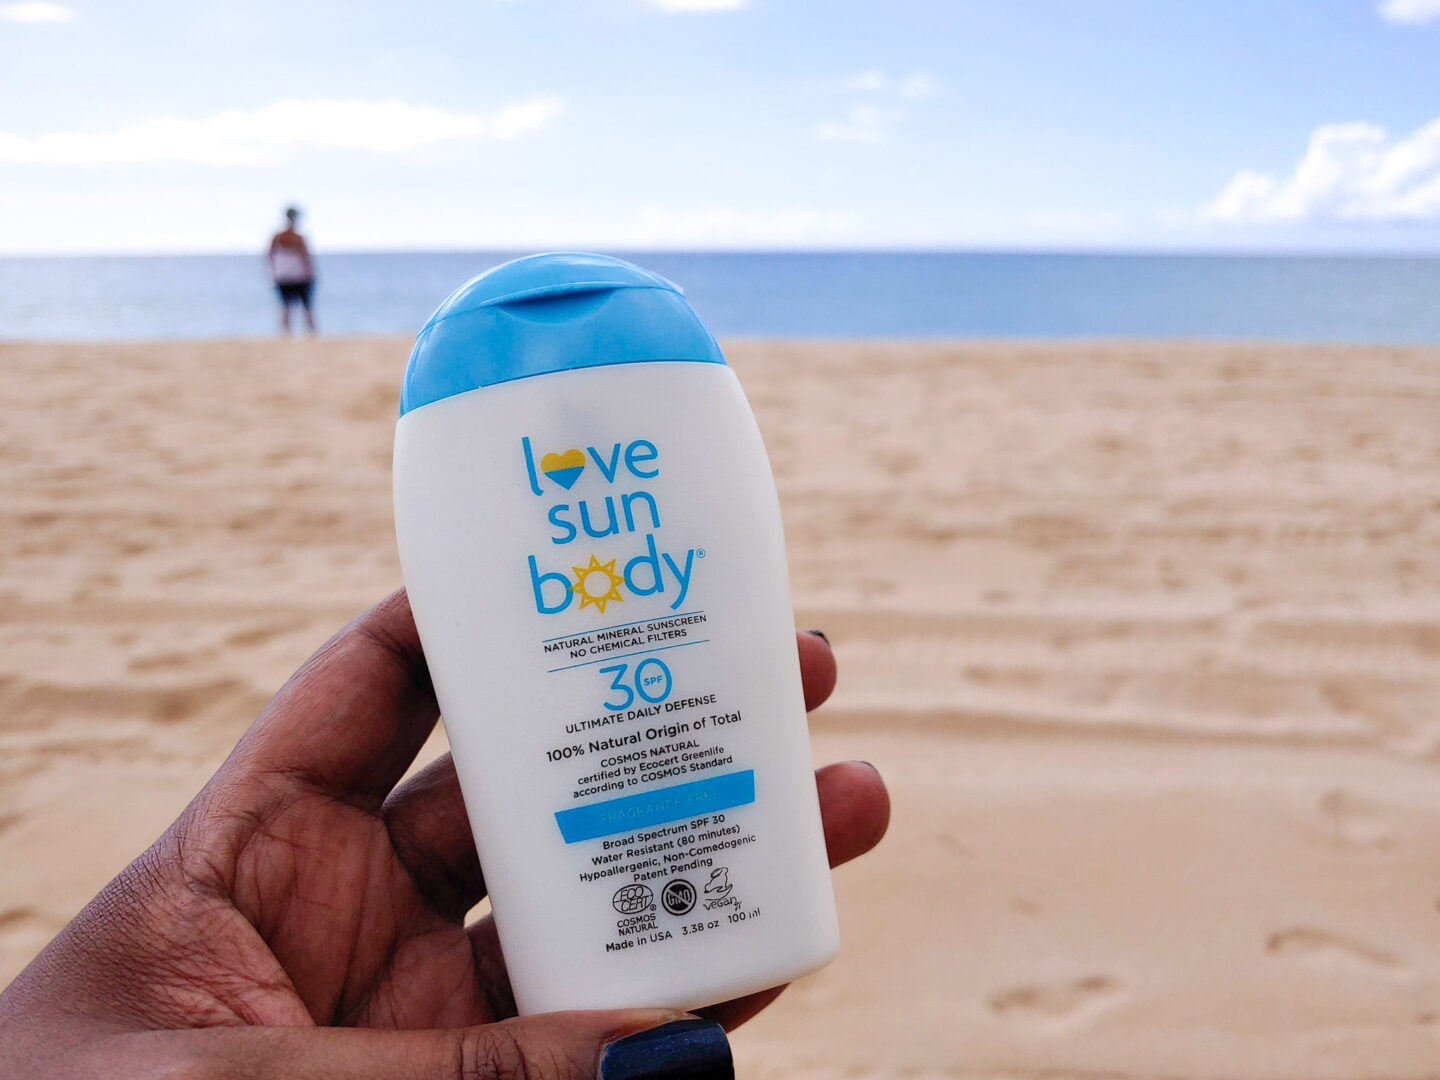 patranila holds a bottle of love sun body sunscreen at the beach